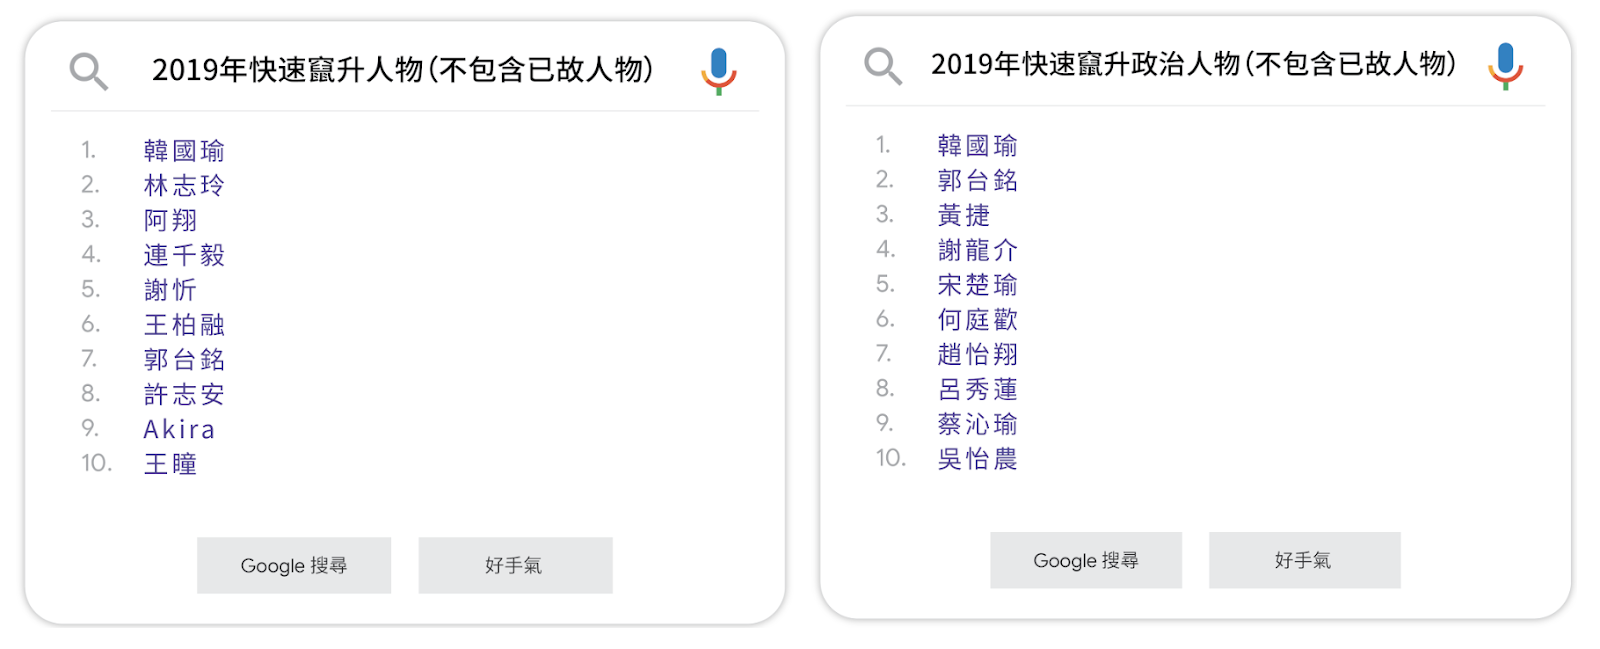 SEO - Google 2019 年度搜尋排行榜大公開